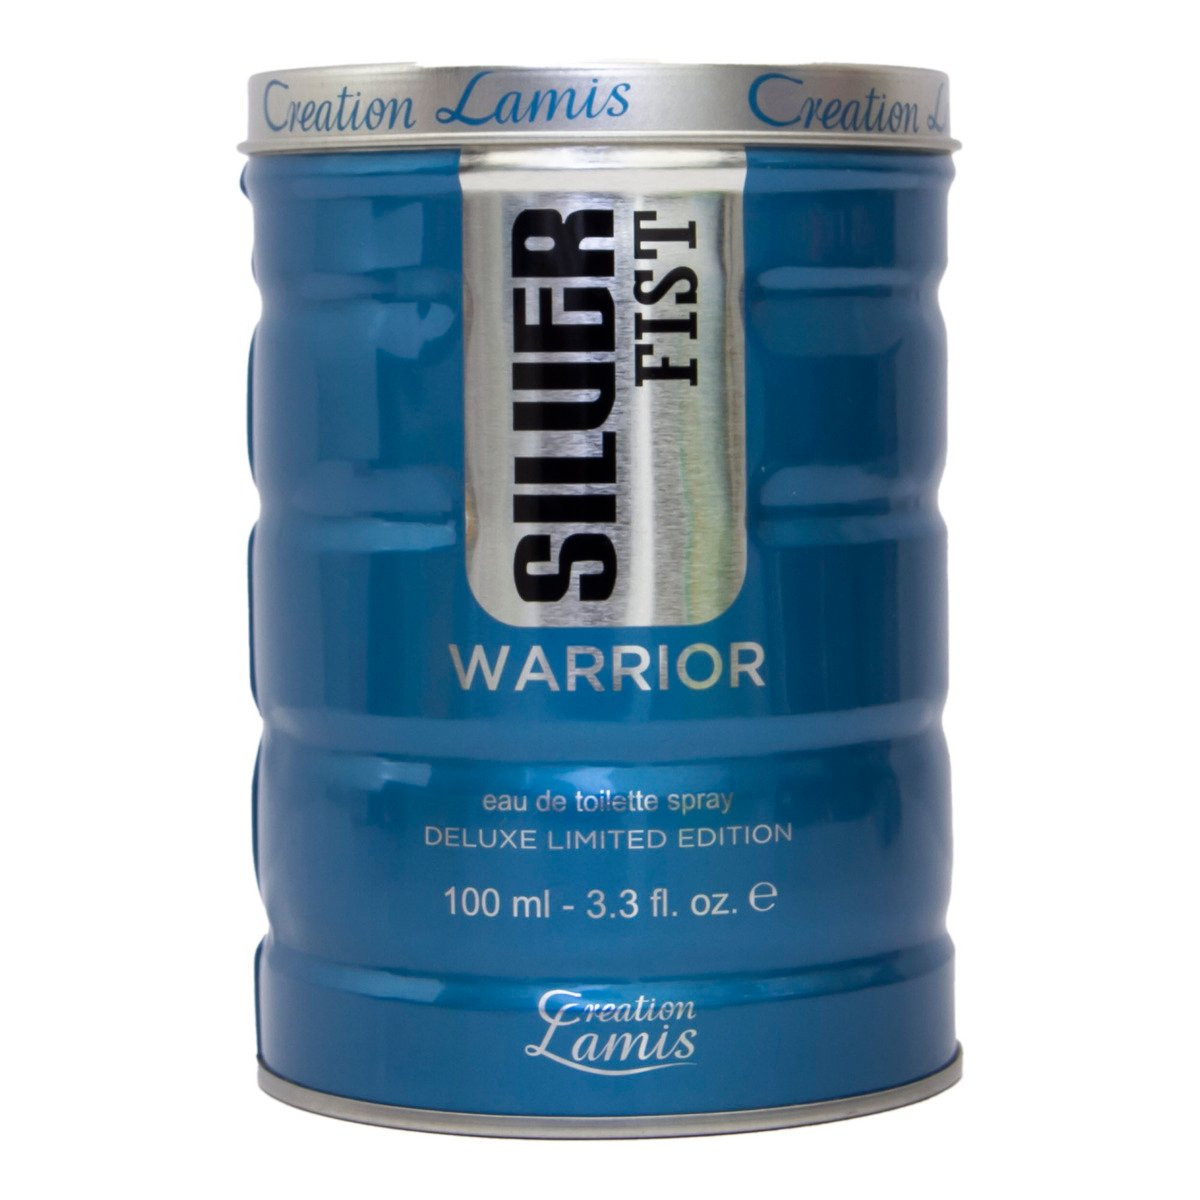 Creation Lamis Silver Fist Warrior EDT For Men 100 ml